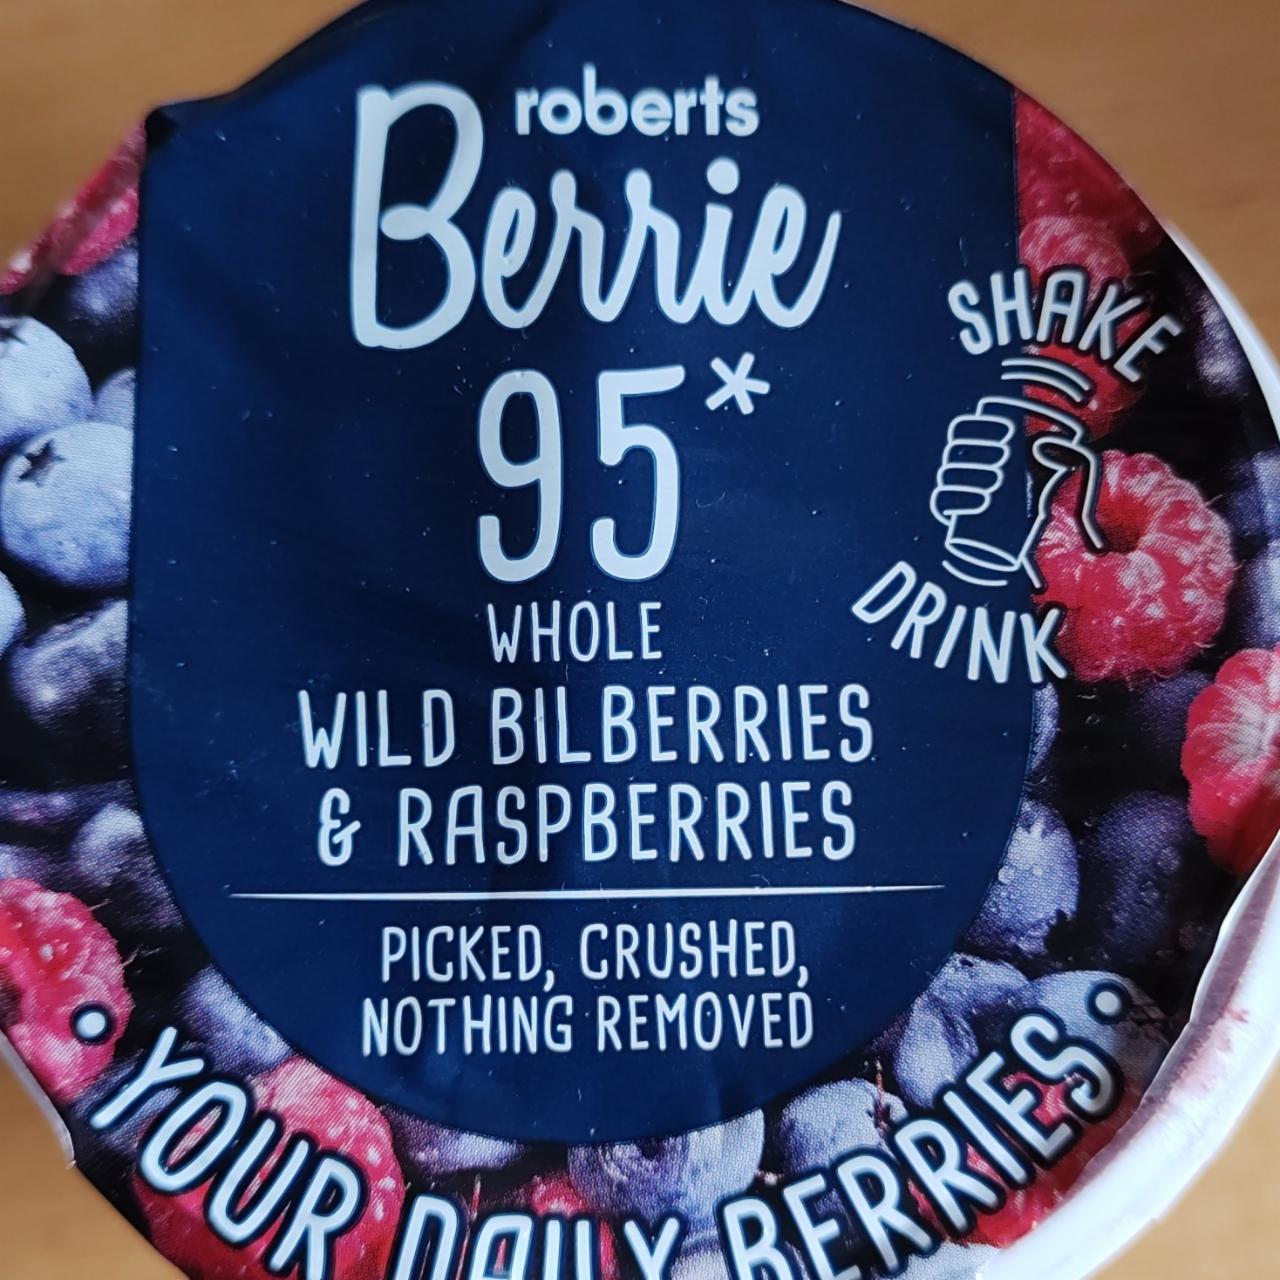 Fotografie - Whole Wild Bilberries & Raspberries Roberts Berrie